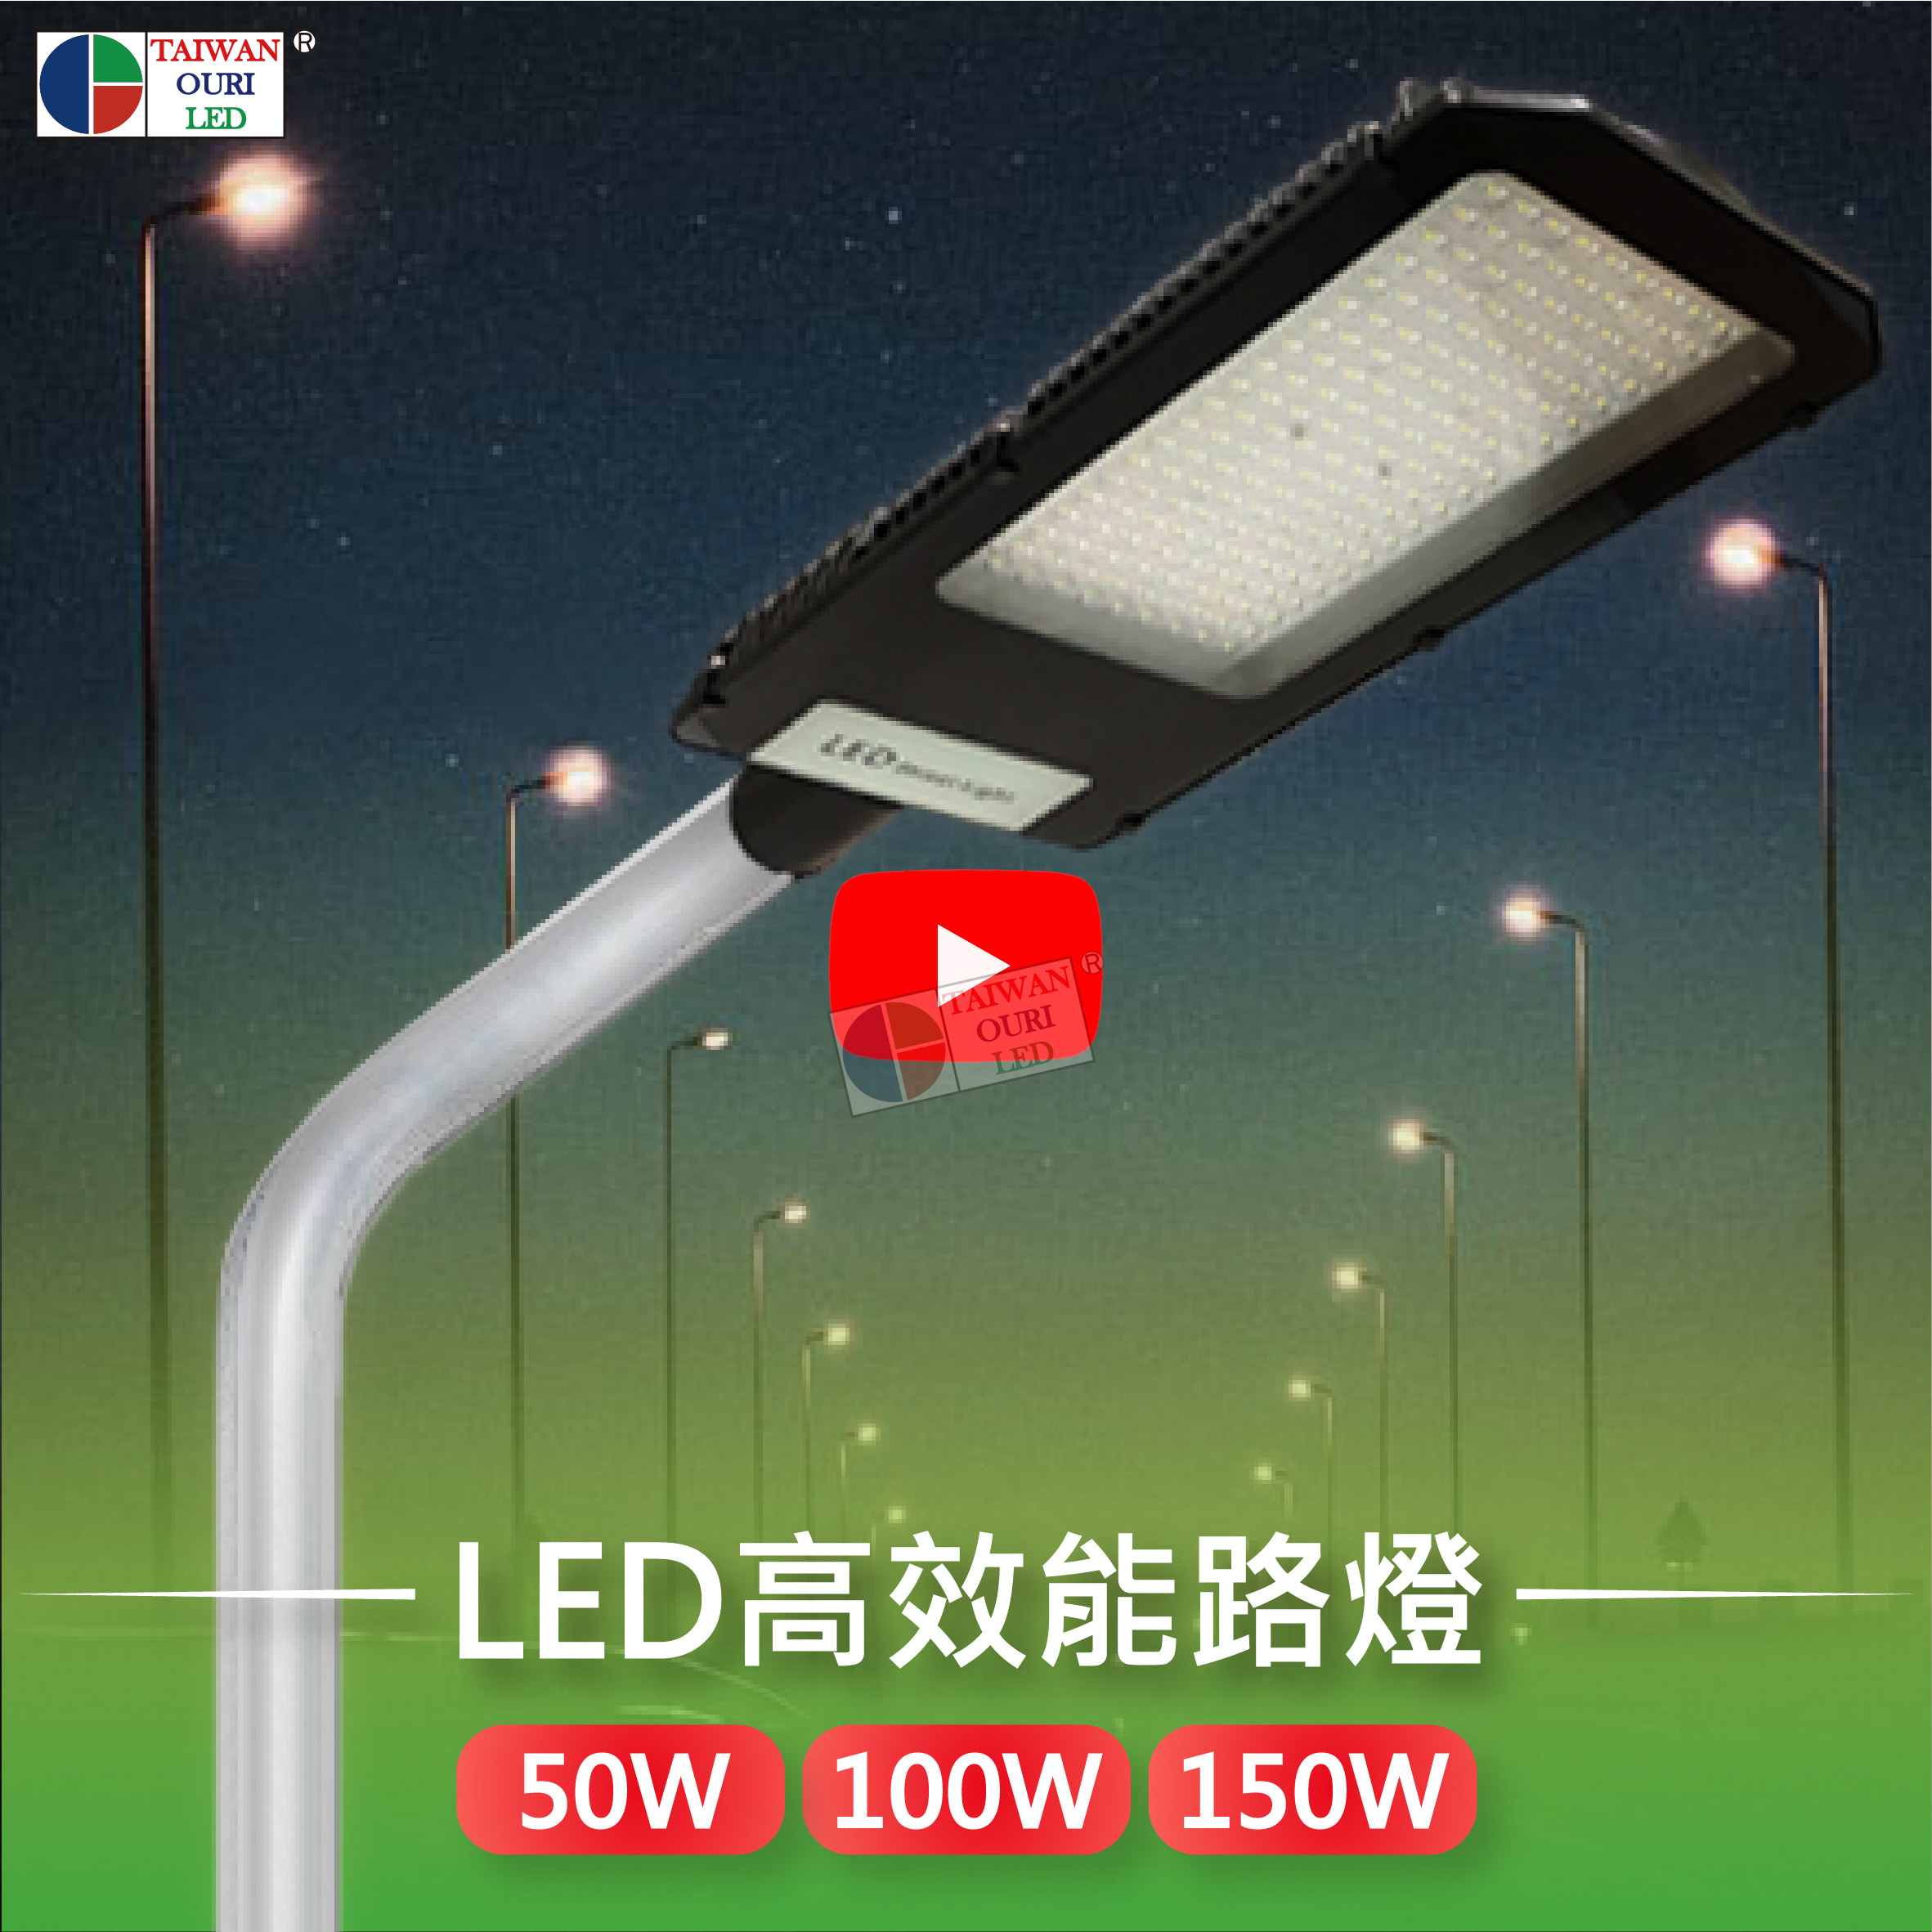 LED高效能路燈